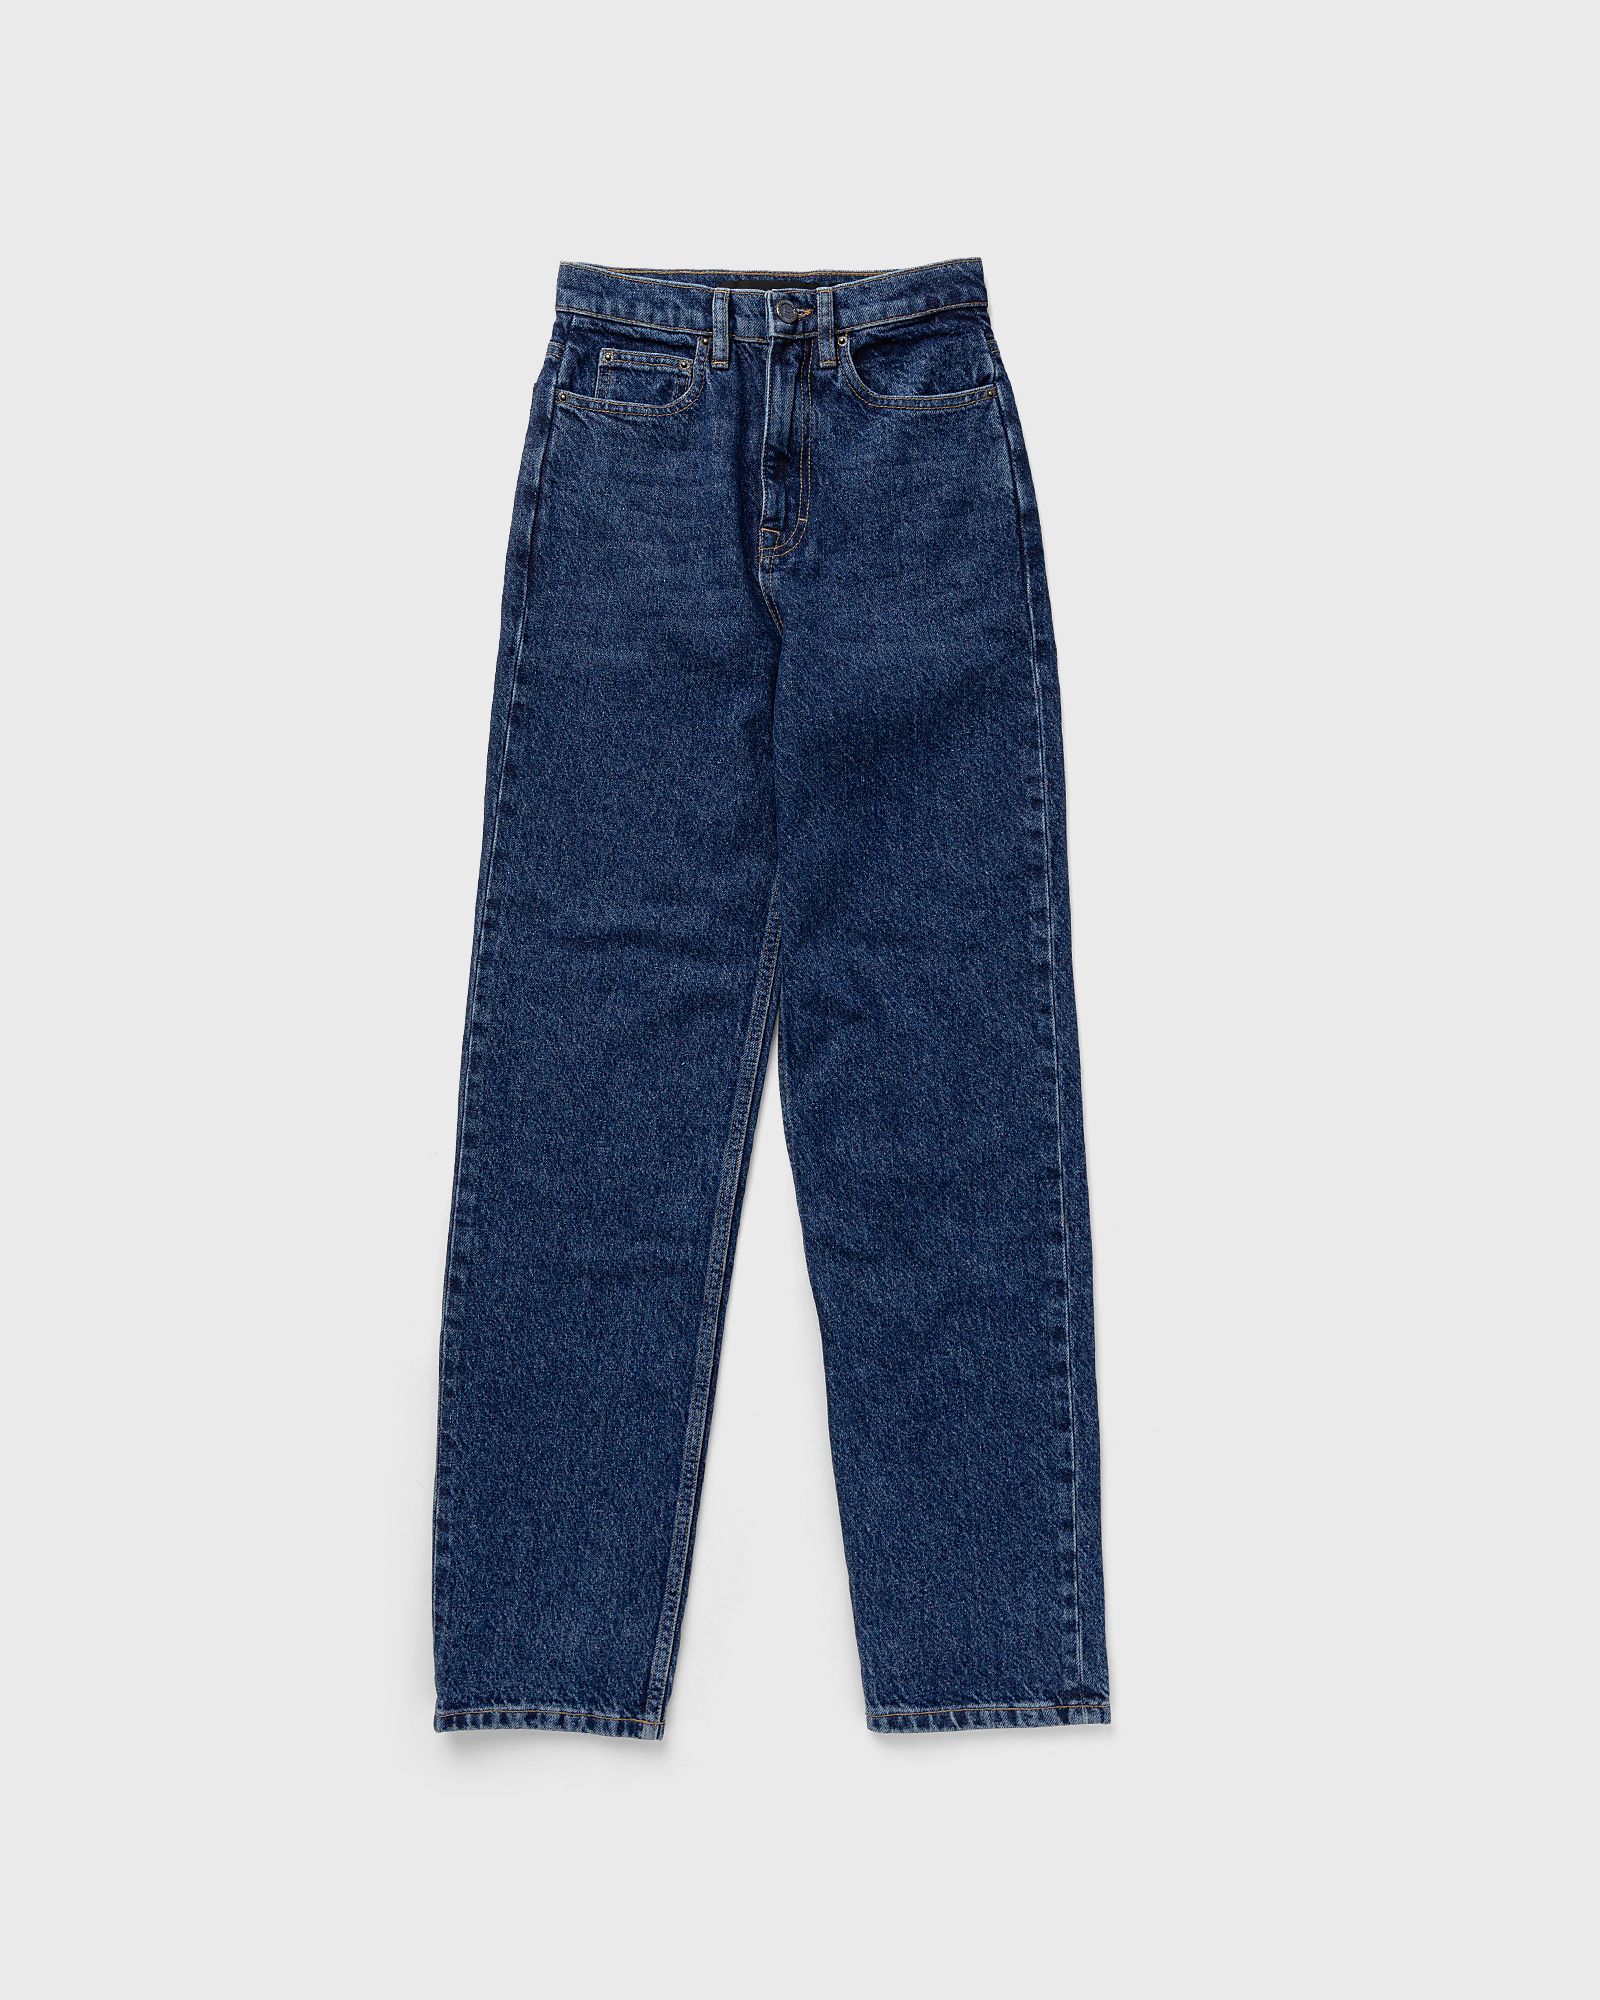 ROTATE Birger Christensen - twill high rise pants women jeans blue in größe:m